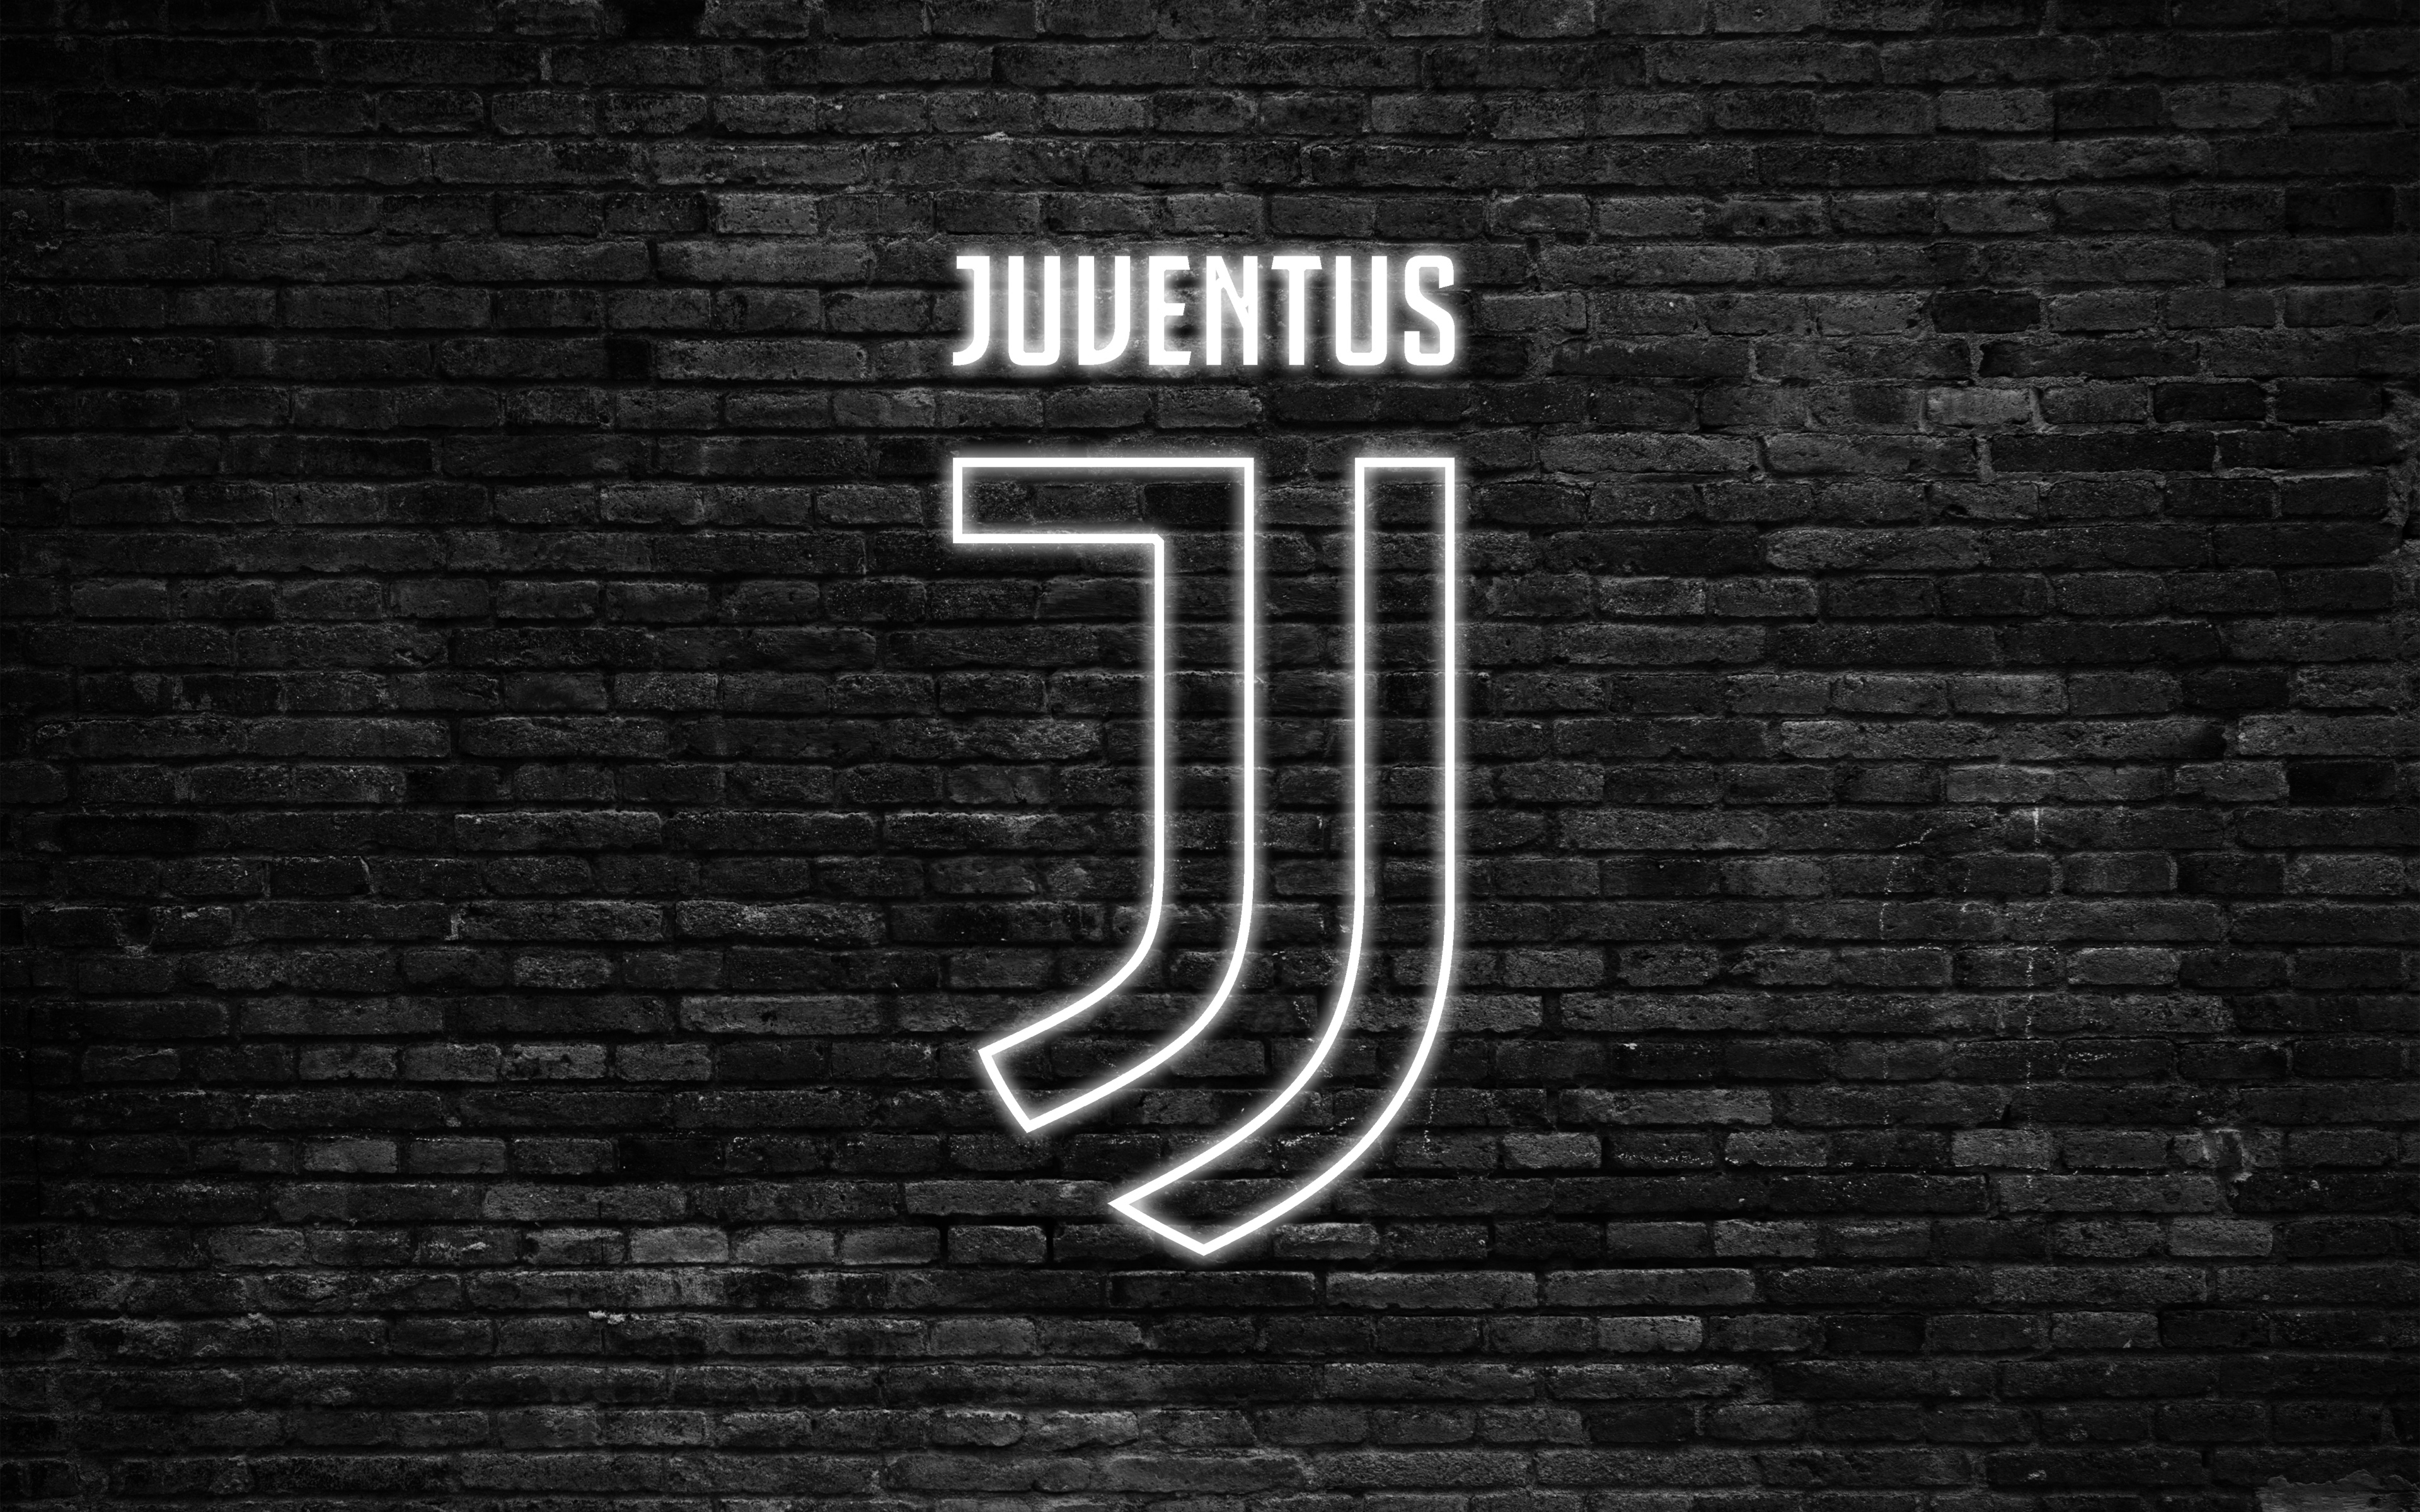 Juventus Logo 4k Ultra HD Wallpaper | Background Image | 3840x2400 | ID:969845 - Wallpaper Abyss